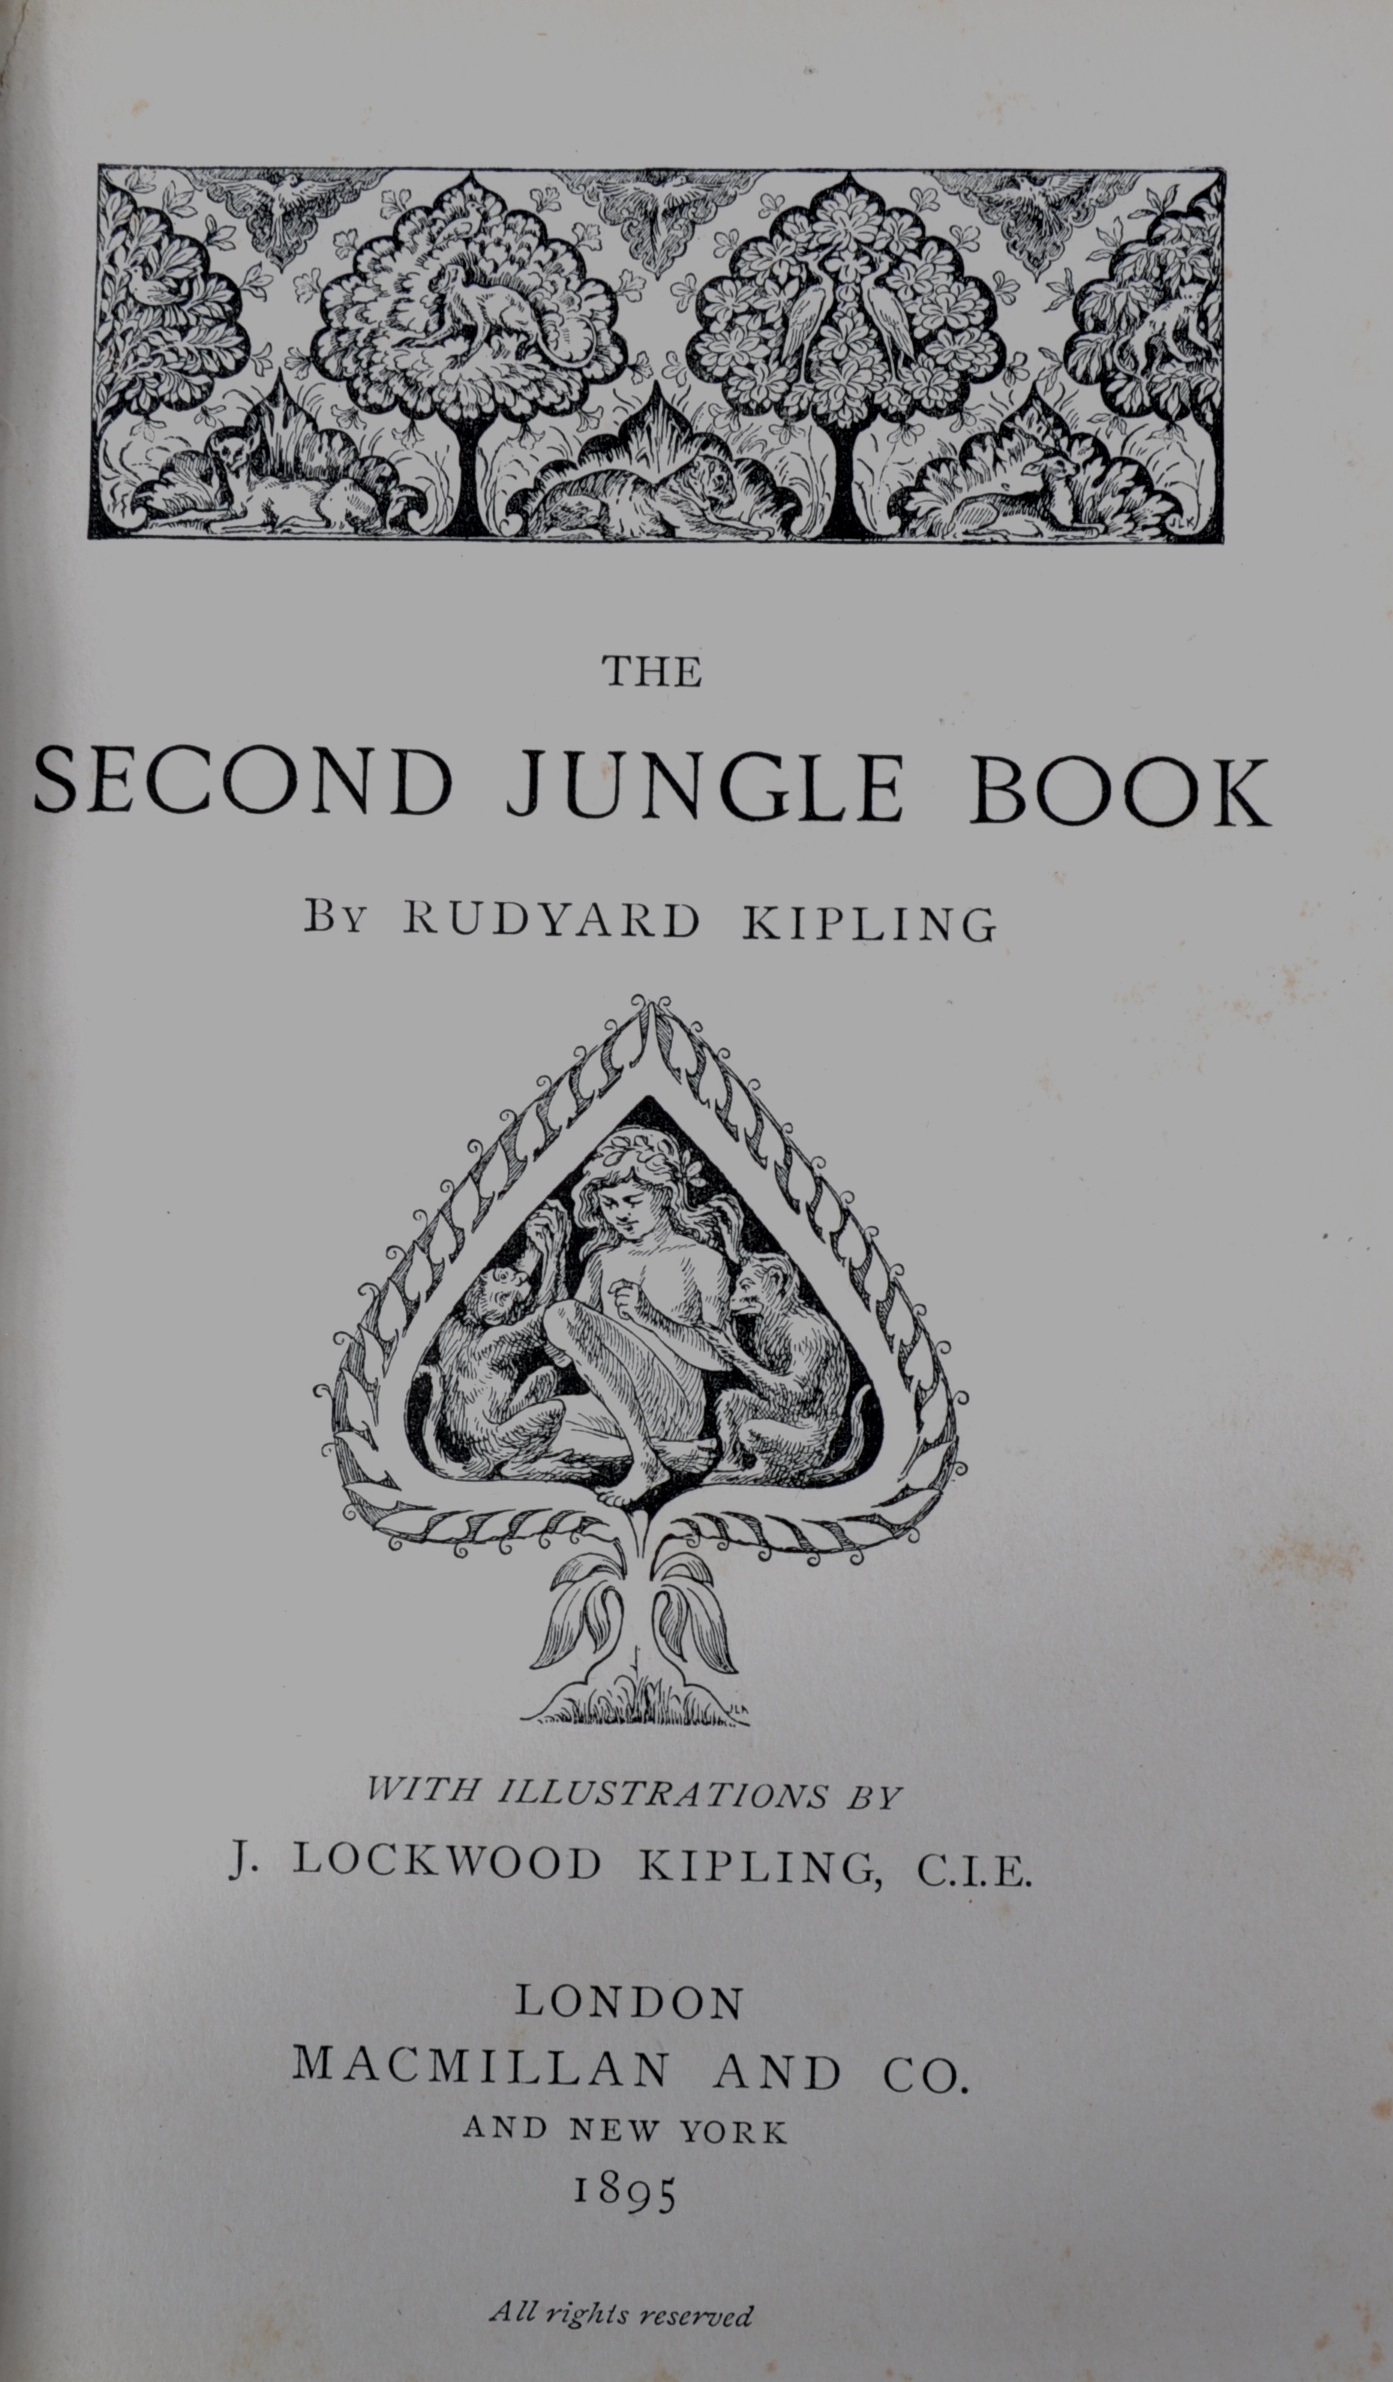 THE SECOND JUNGLE BOOK - RUDYARD KIPLING - 1895